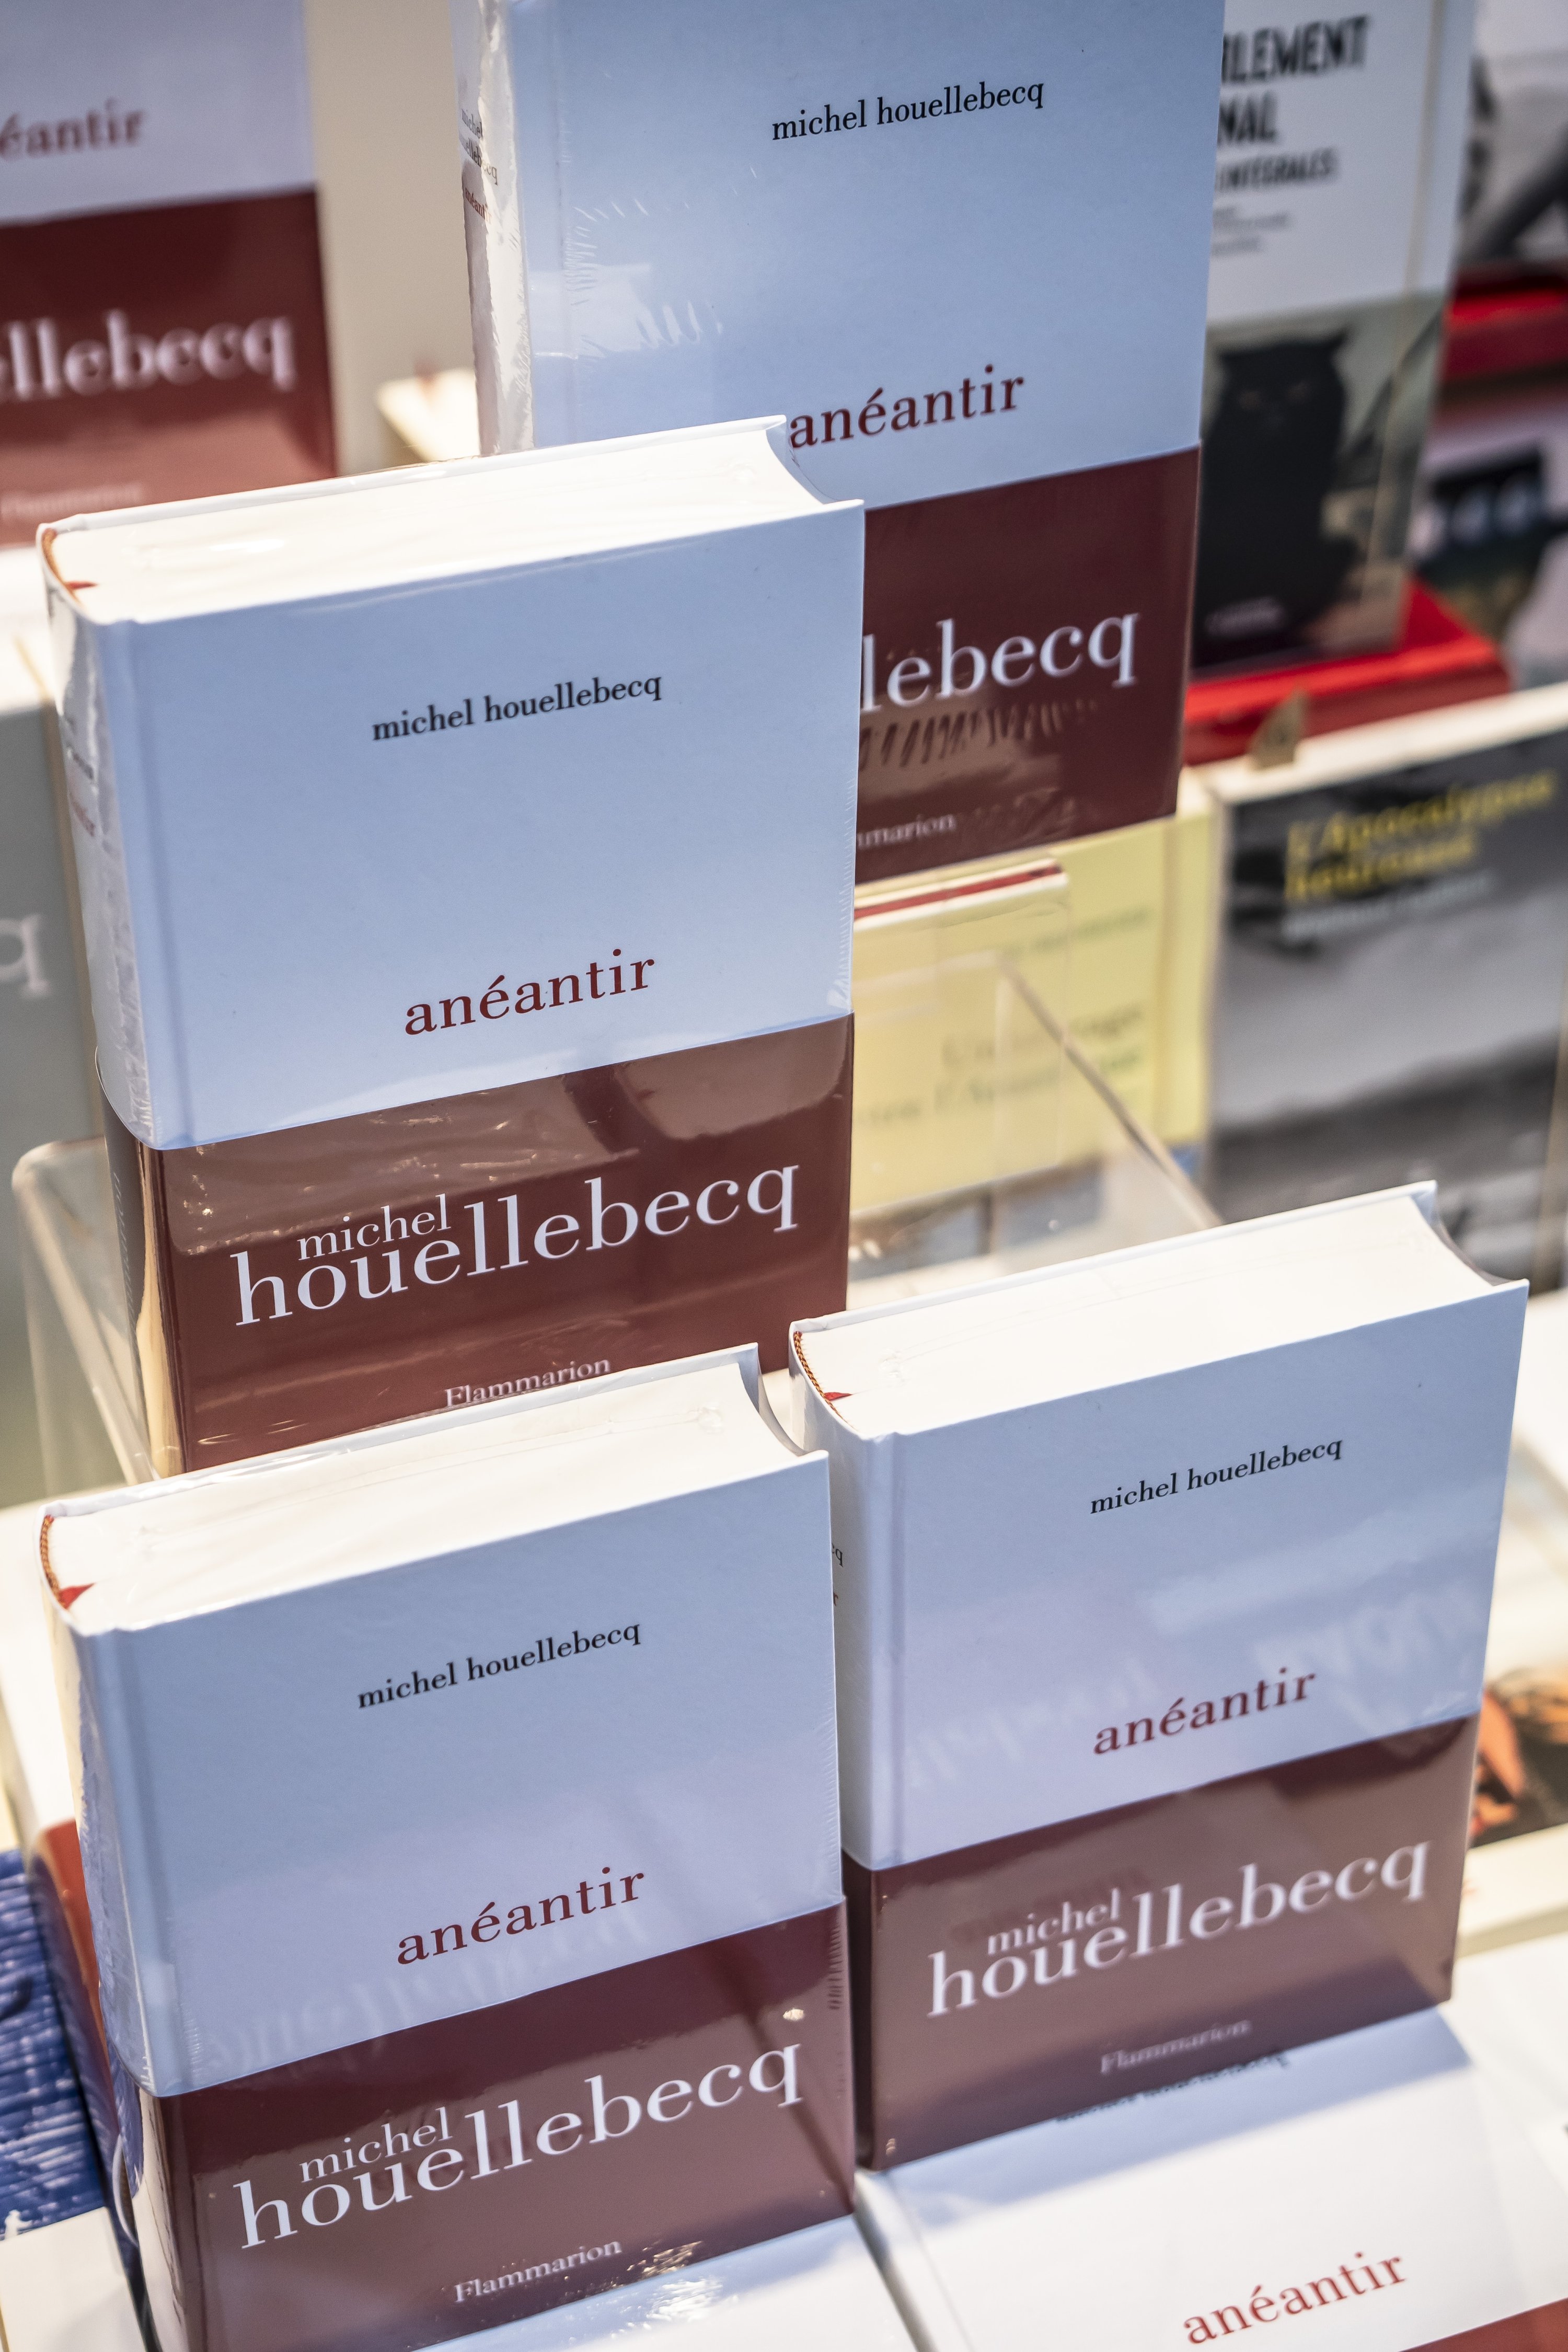 “Aneantir” (“Annihilation”) by Michel Houellebecq in a showcase of a bookstore, Paris, France, Jan. 13, 2022. (REUTERS)